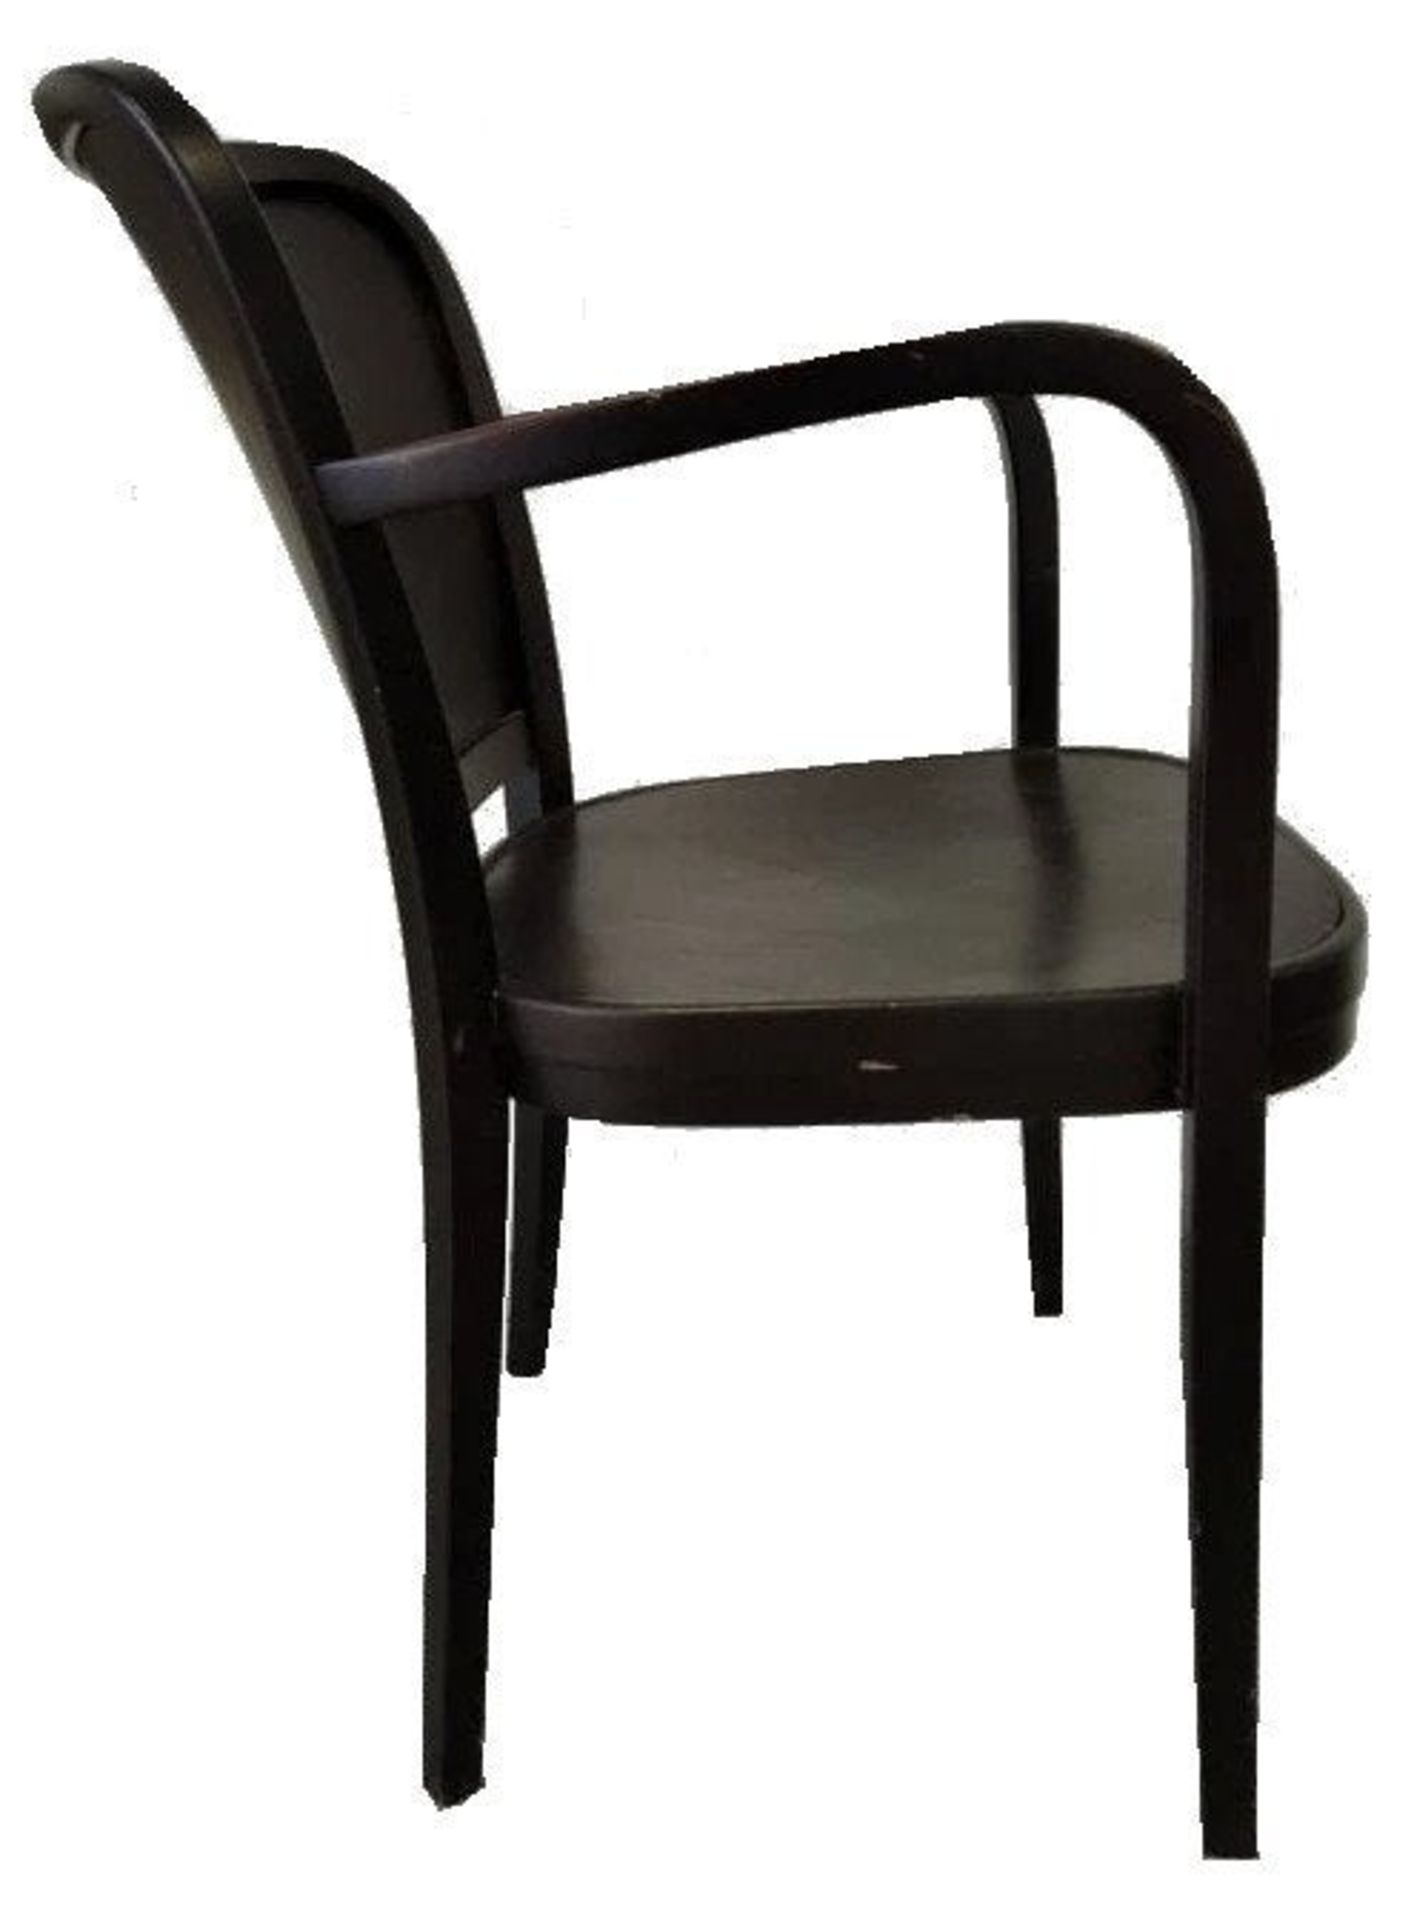 Pair | Thonet Chairs - Image 4 of 6